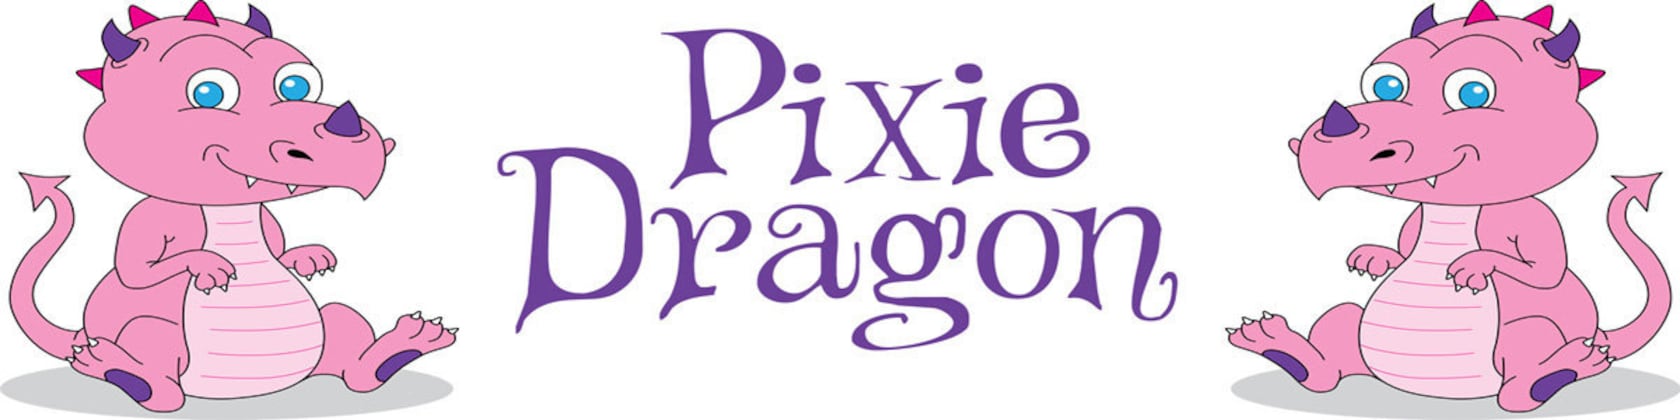 PixieDragonClothing - Etsy